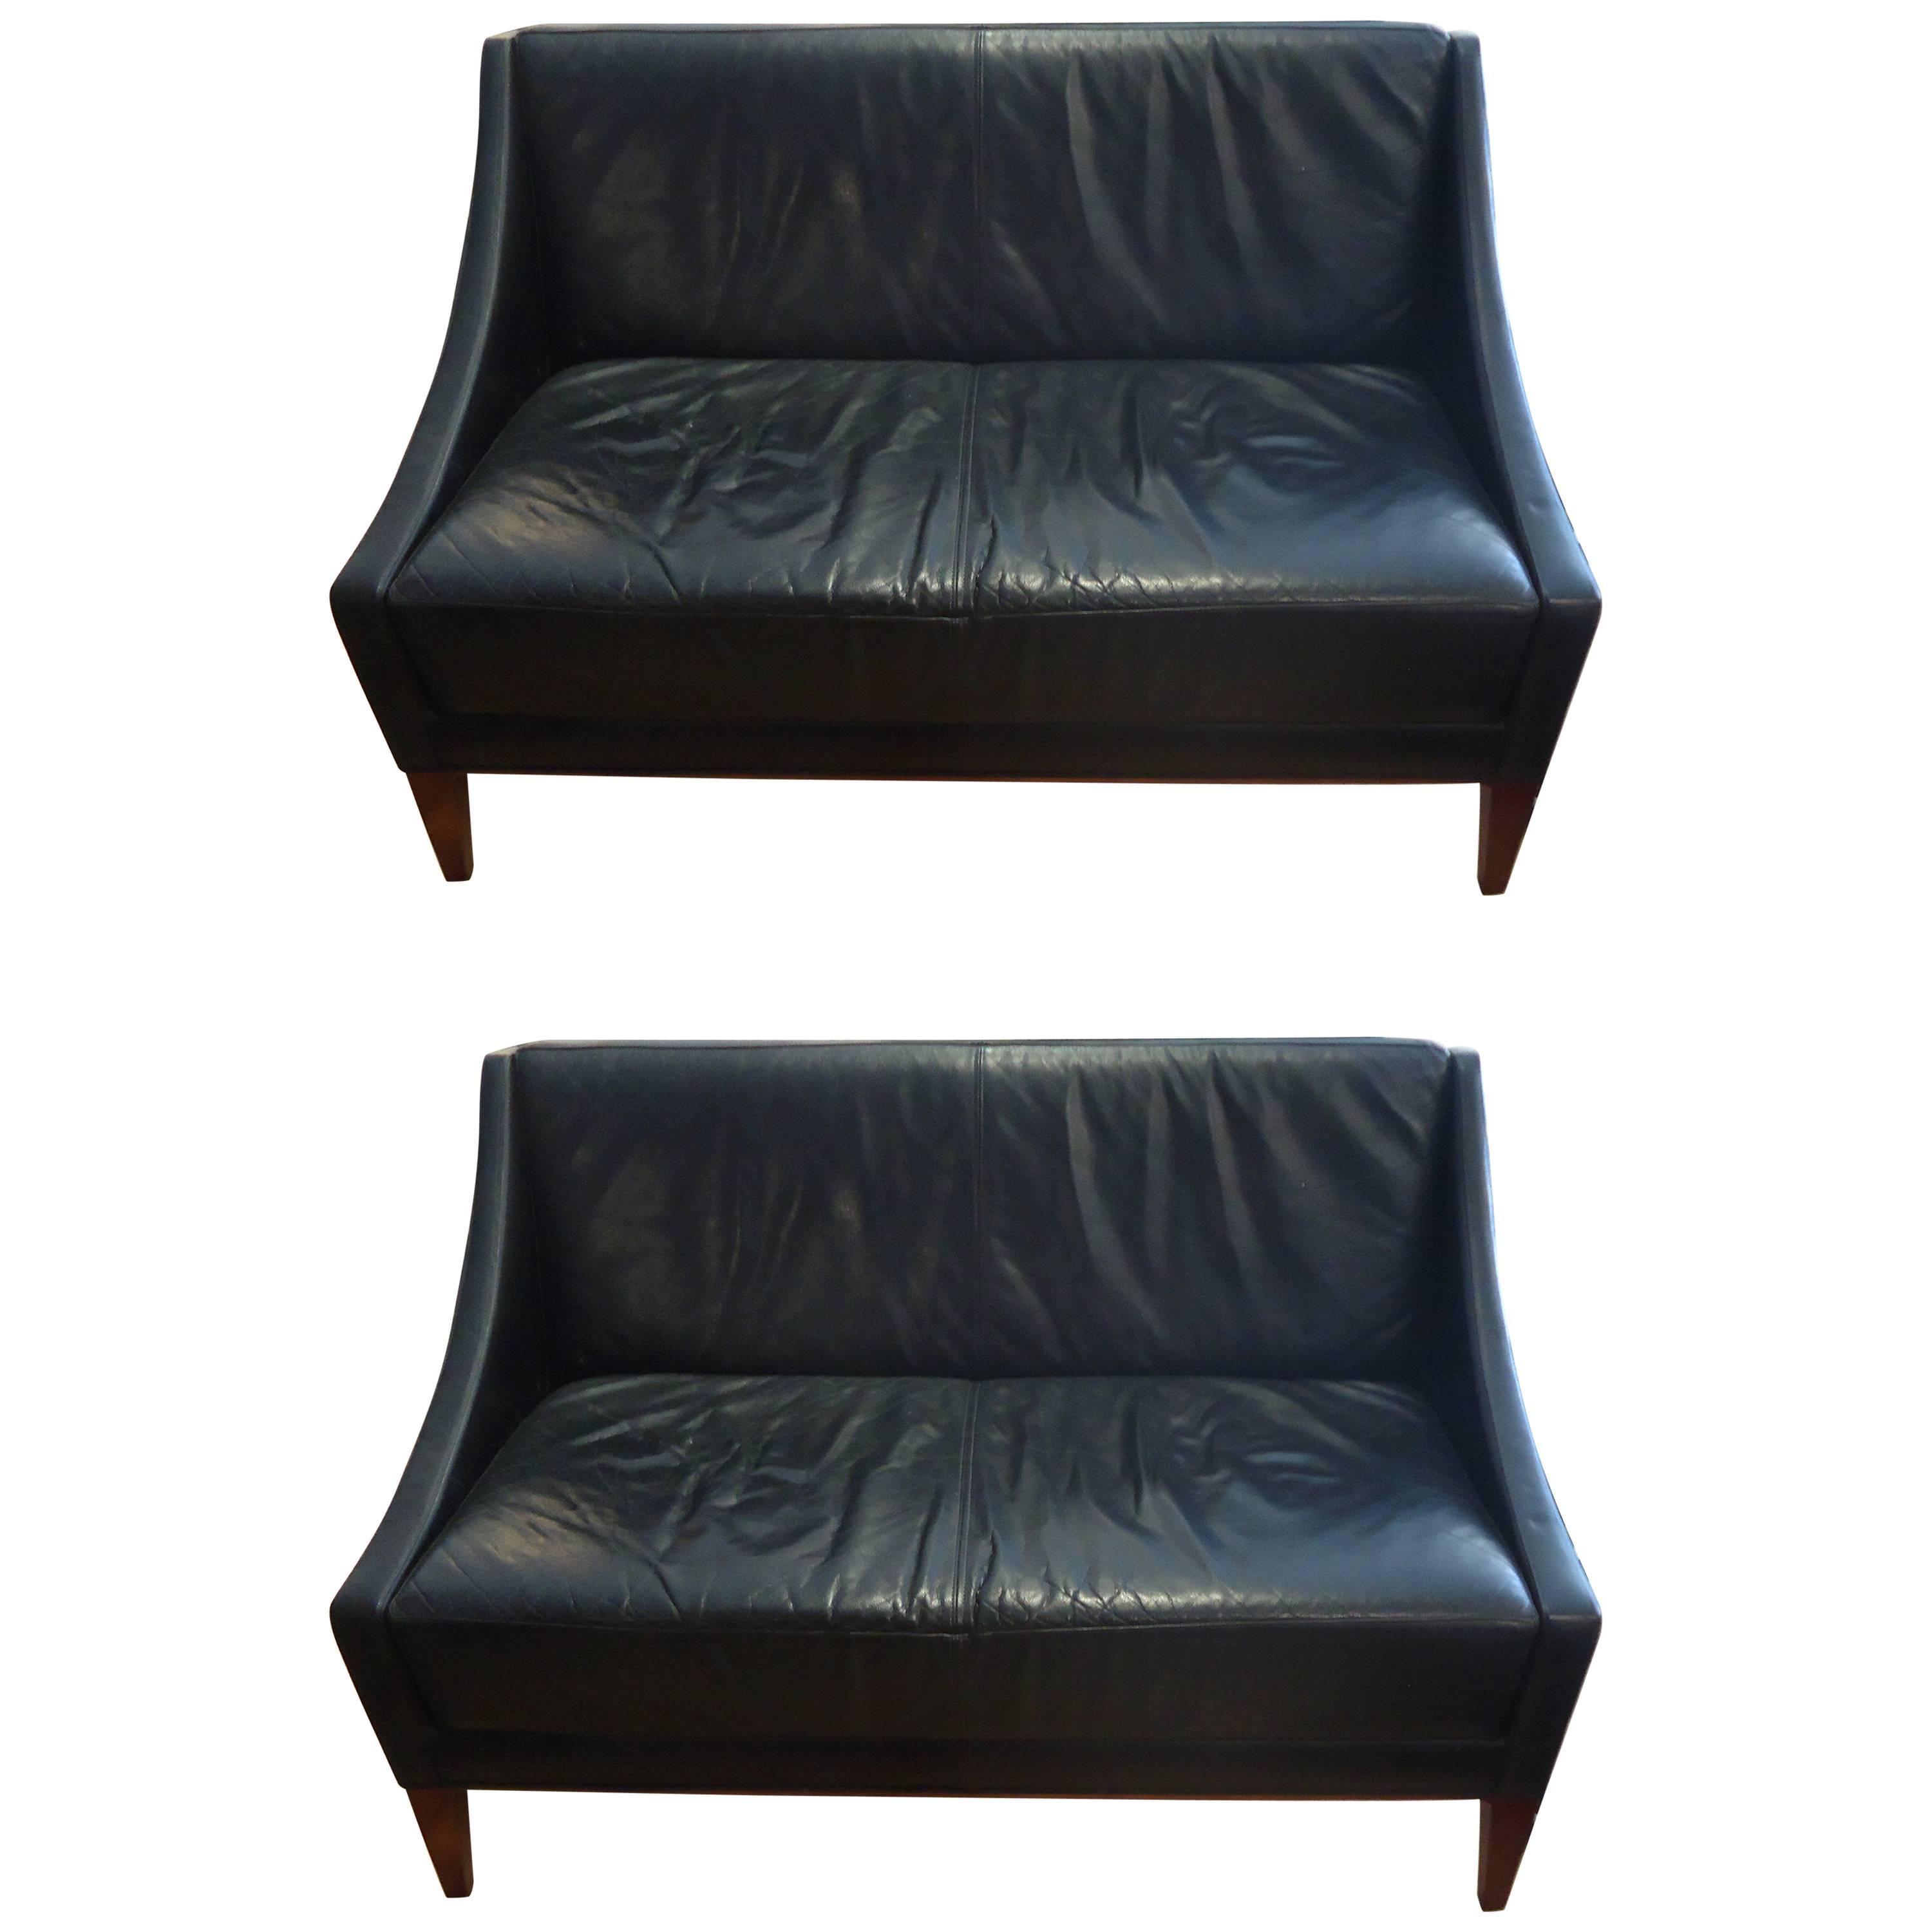 Pair of Sleek Mid-Century Modern Black Leather Loveseats